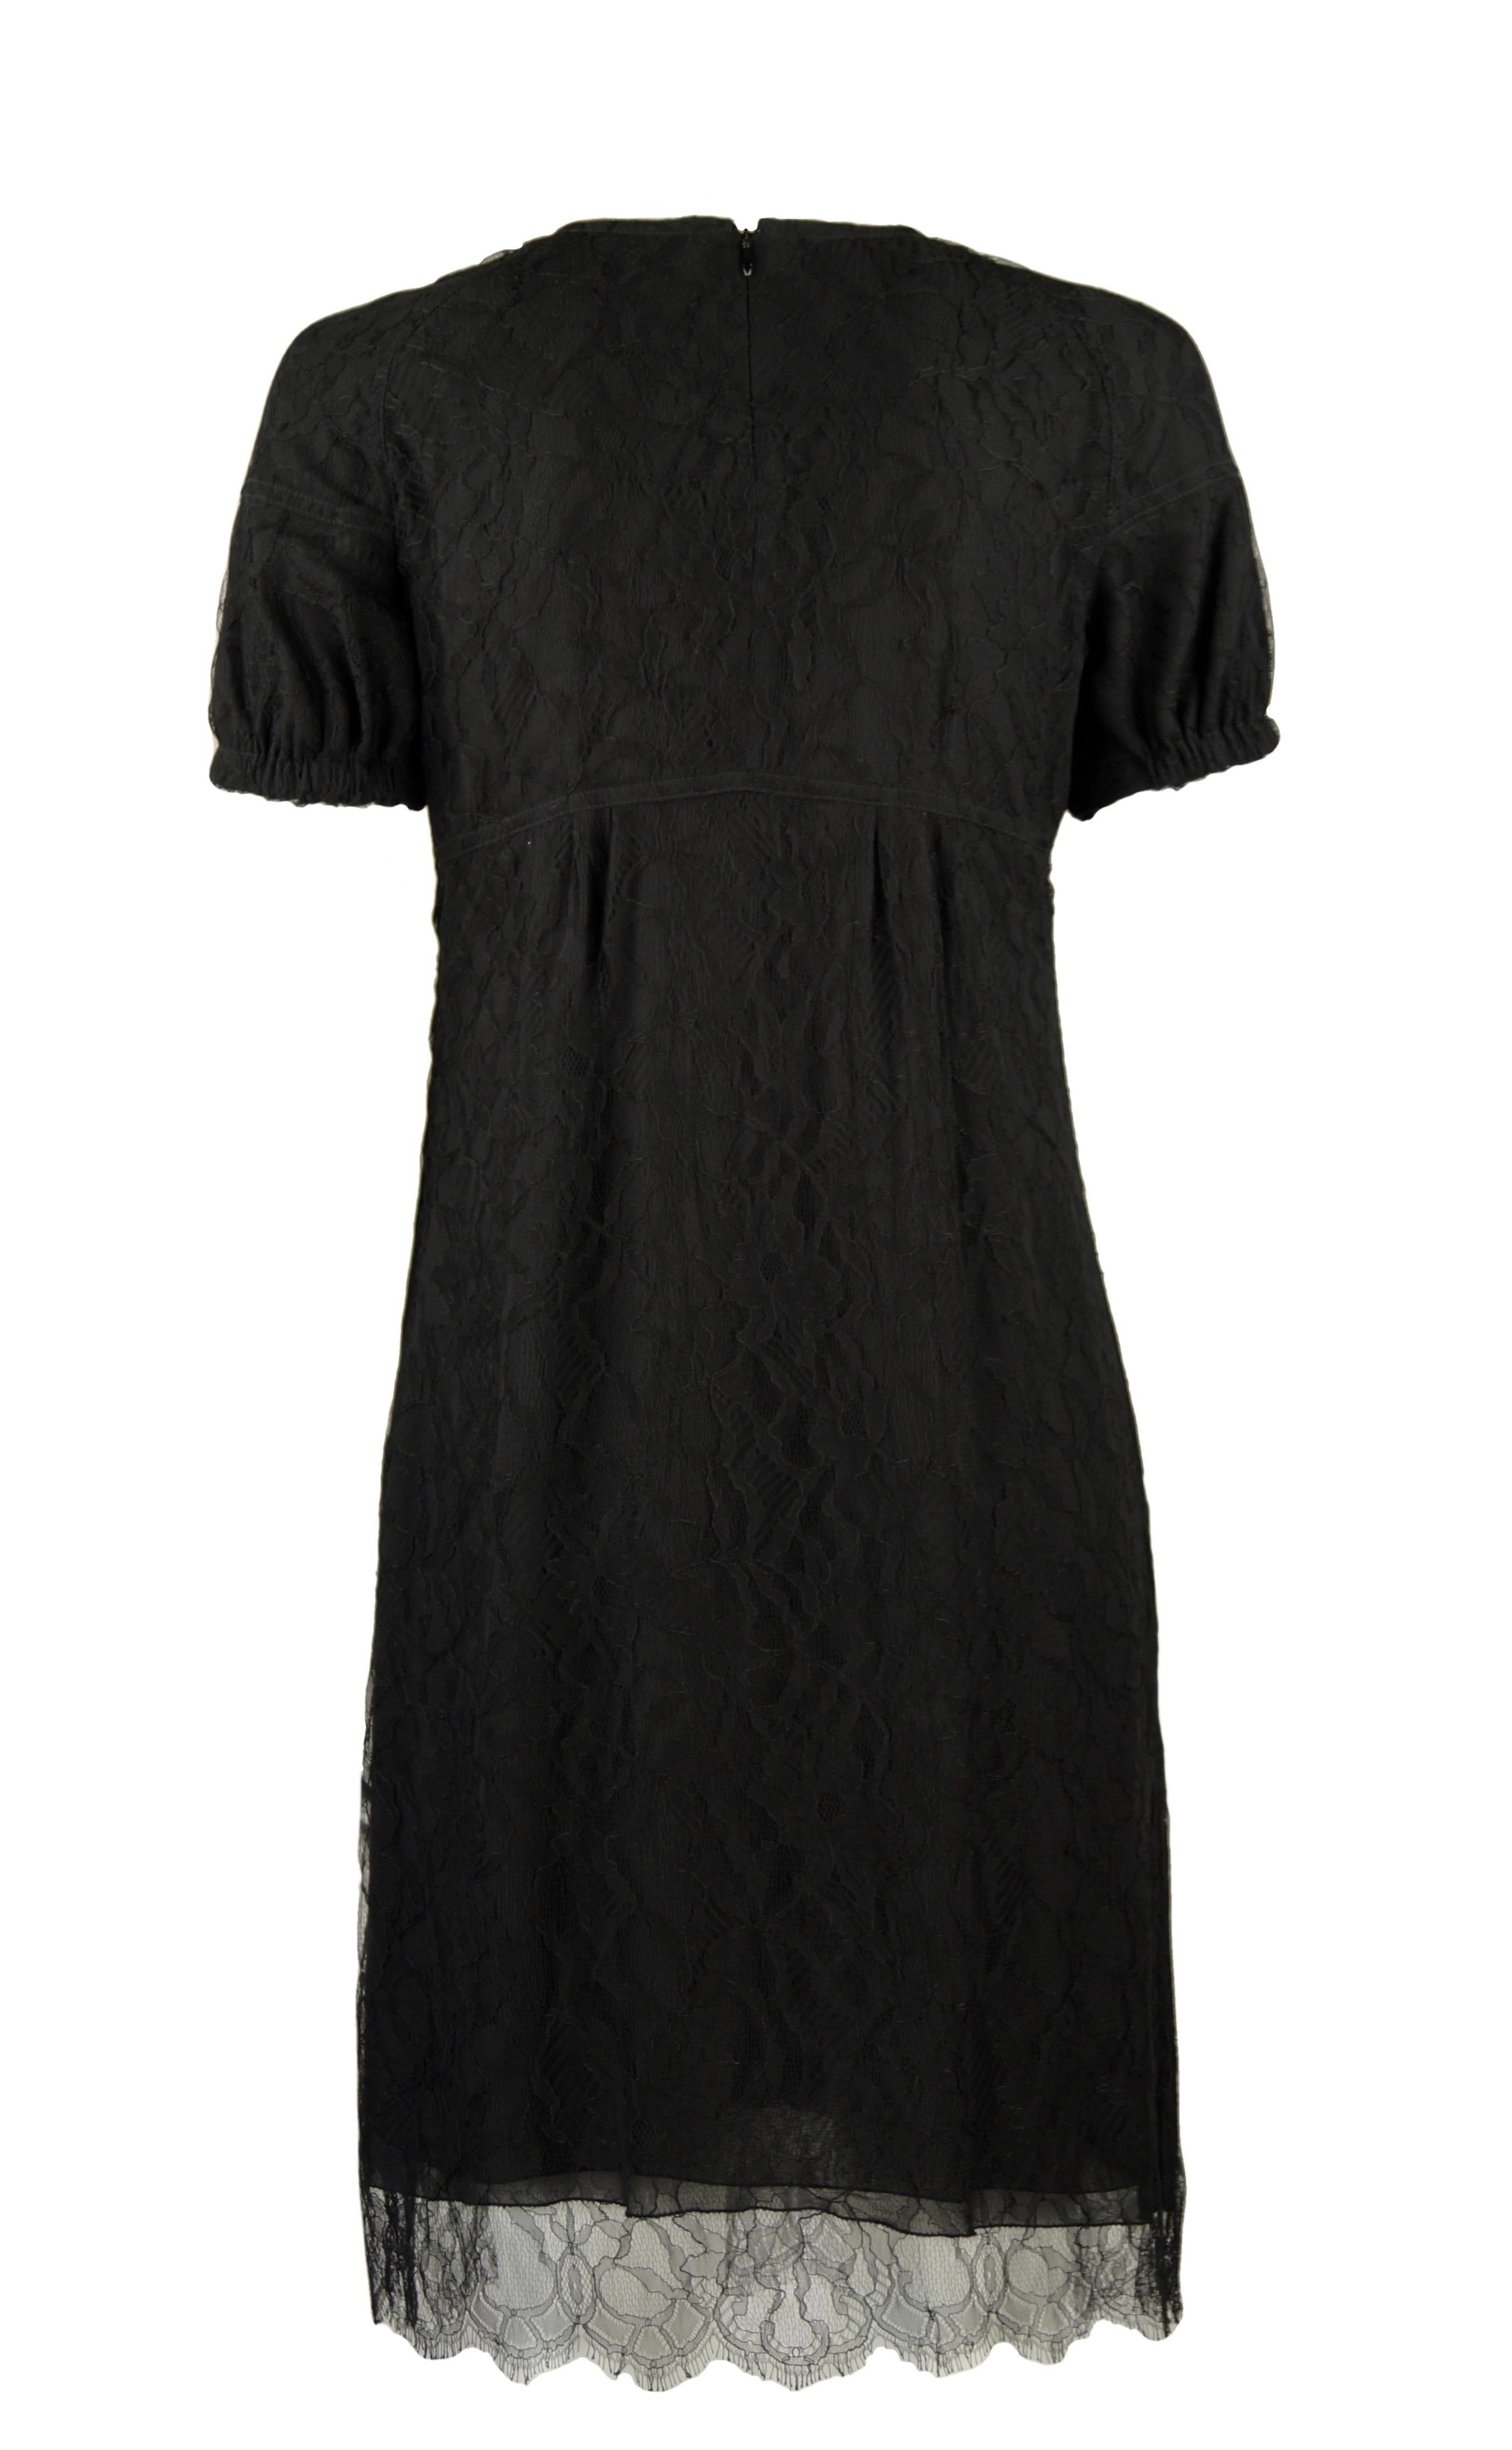 Women's Burberry black lace dress For Sale